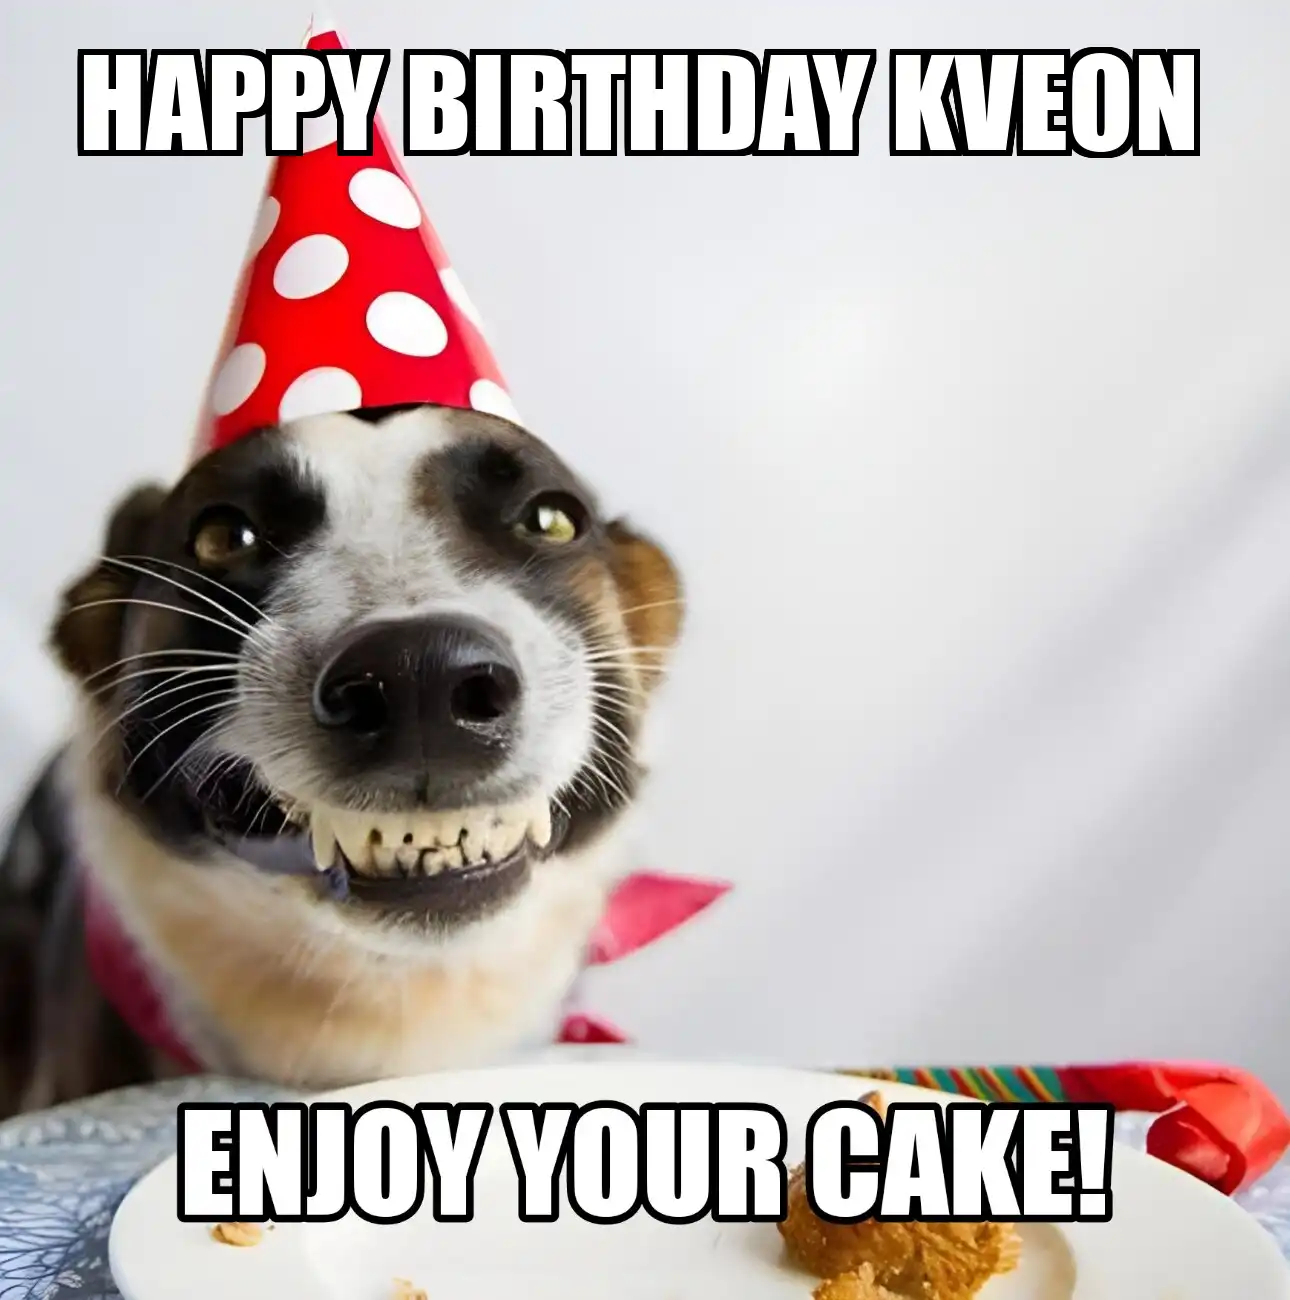 Happy Birthday Kveon Enjoy Your Cake Dog Meme